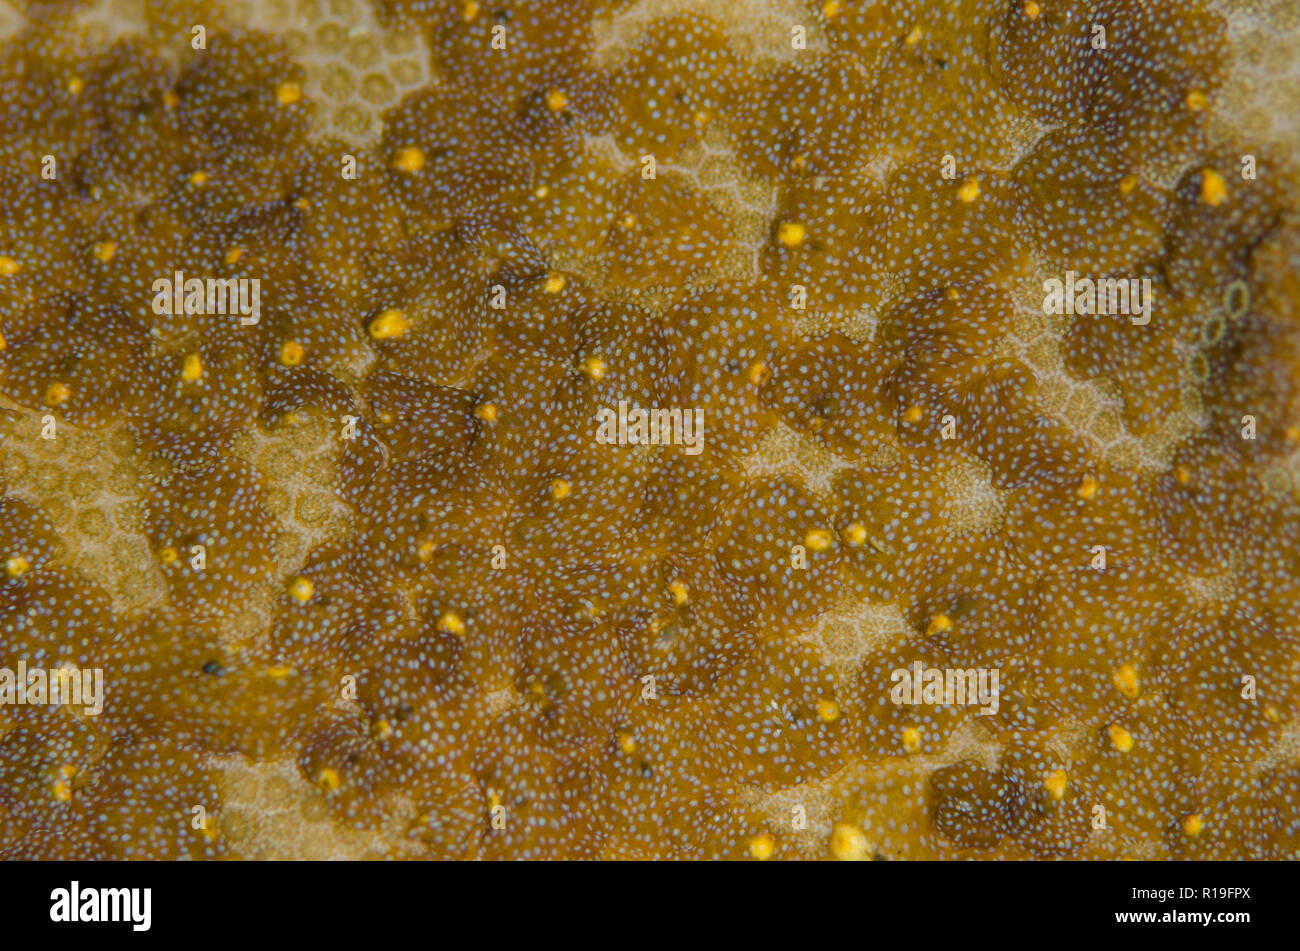 Acoel Flatworms, Waminoa sp, Serena West sito di immersione, su Coral, Lembeh Straits, Sulawesi, Indonesia Foto Stock